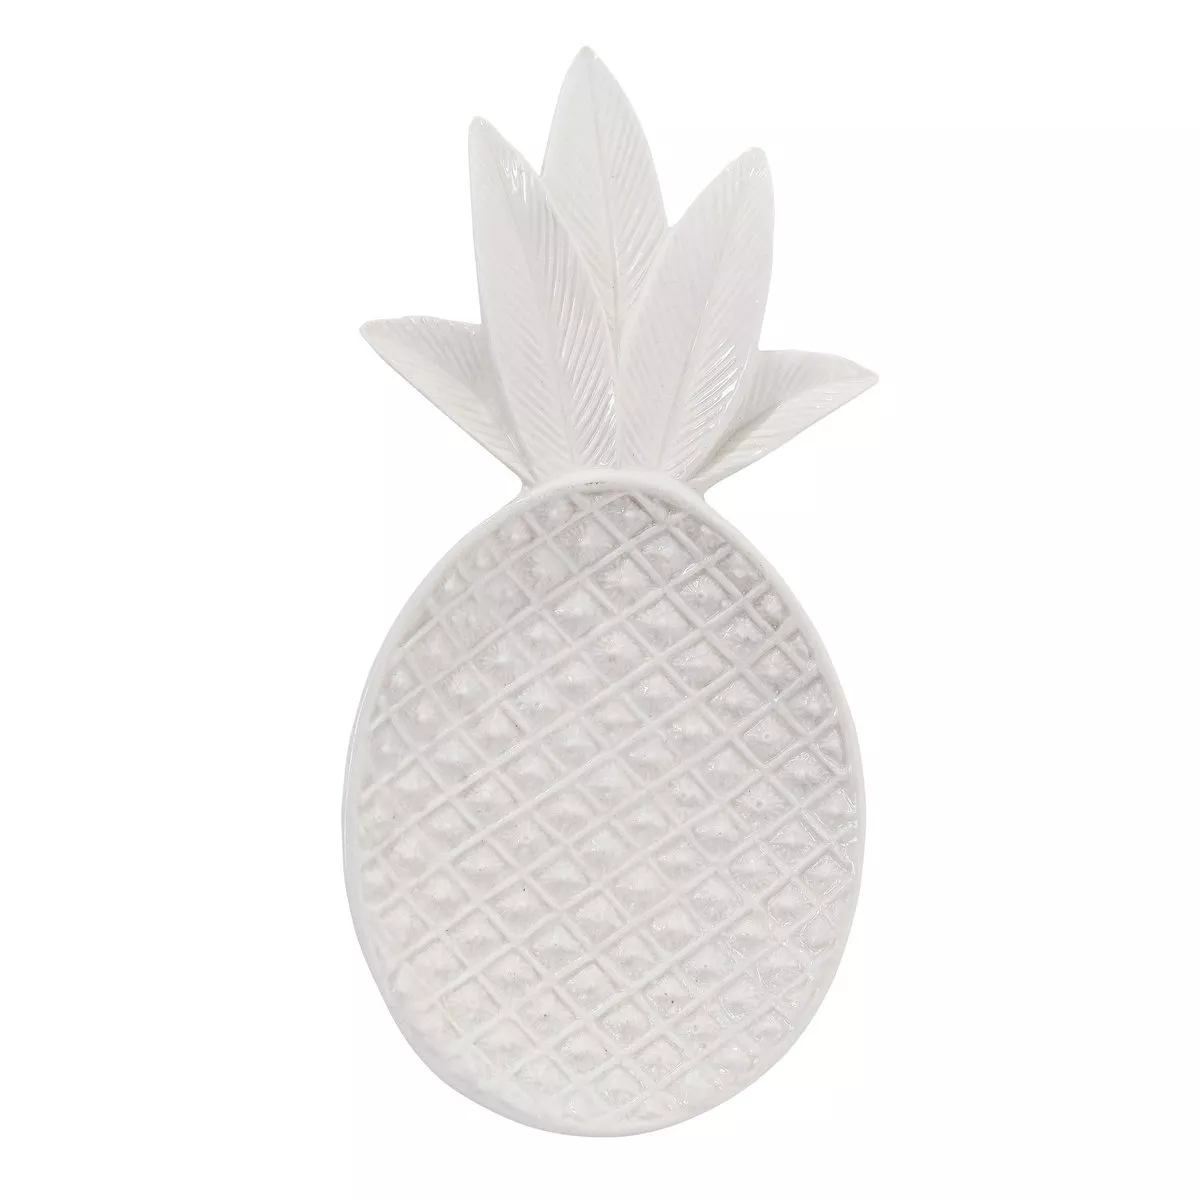 #3 - Bloomingville Pineapple dekorationsbakke hvid